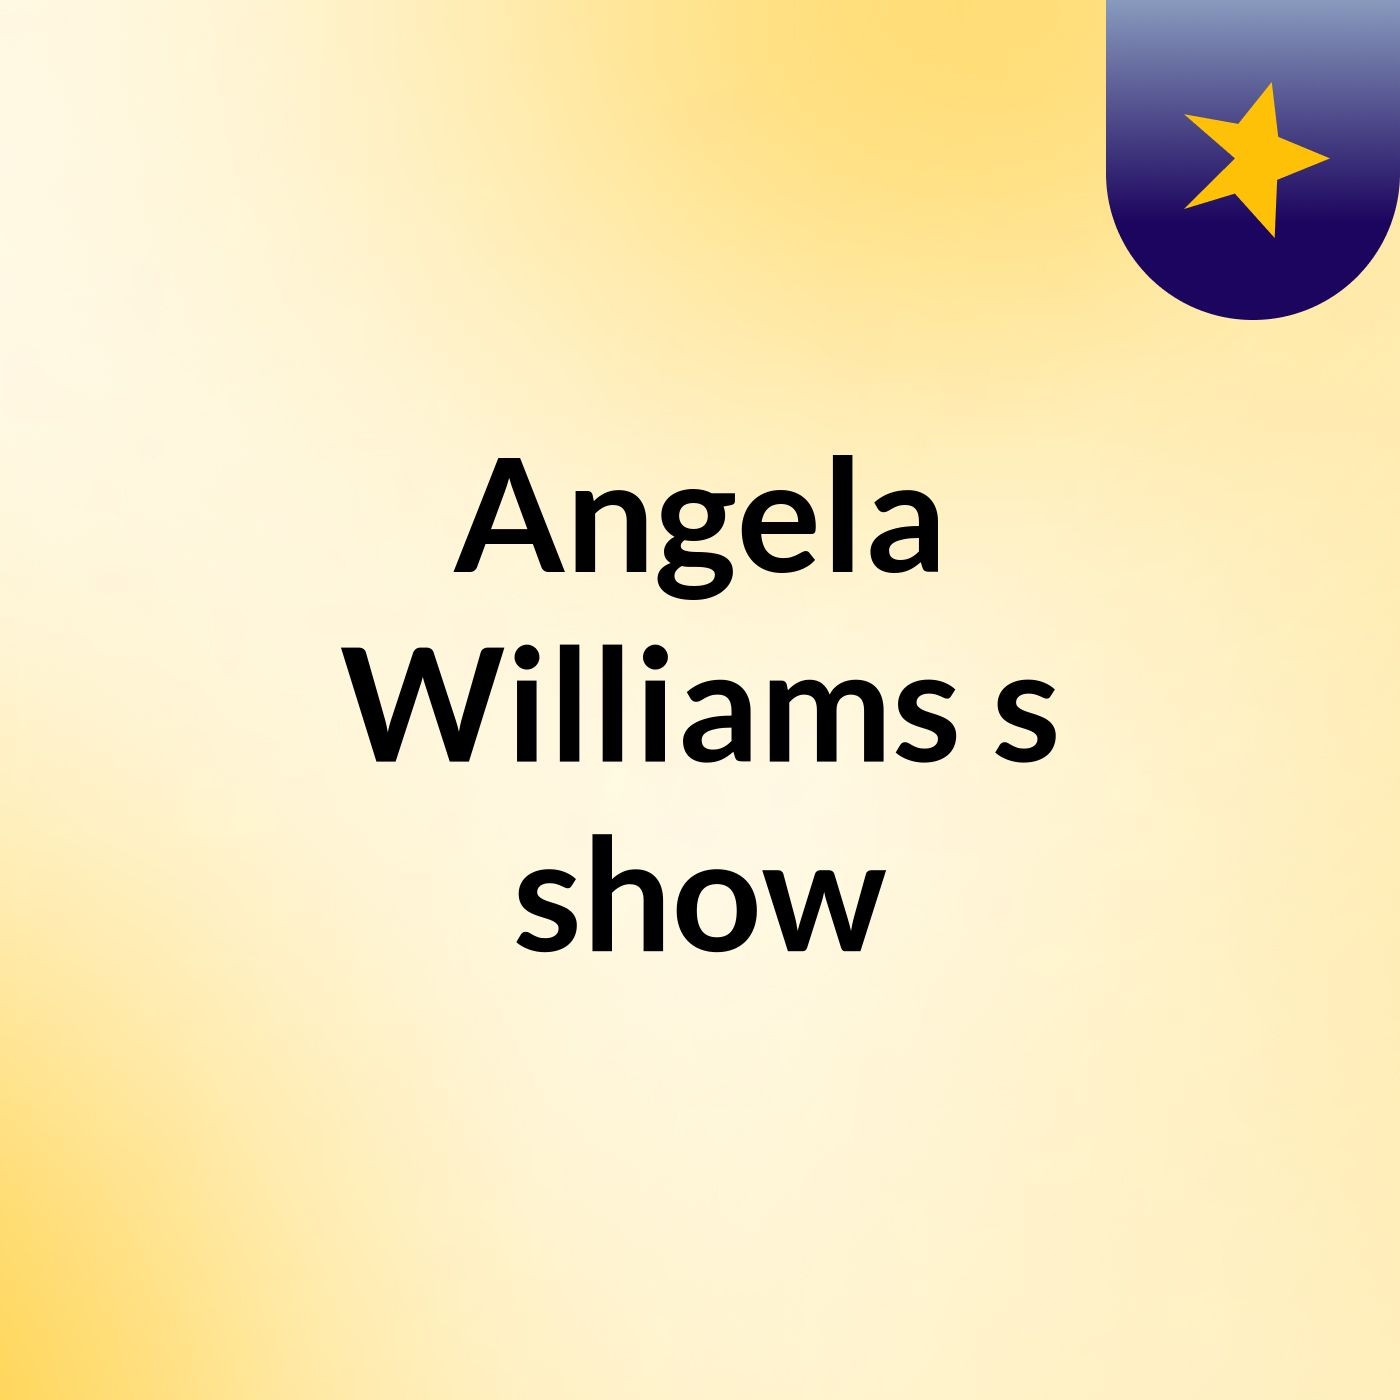 Episode 6 - Angela Williams's show